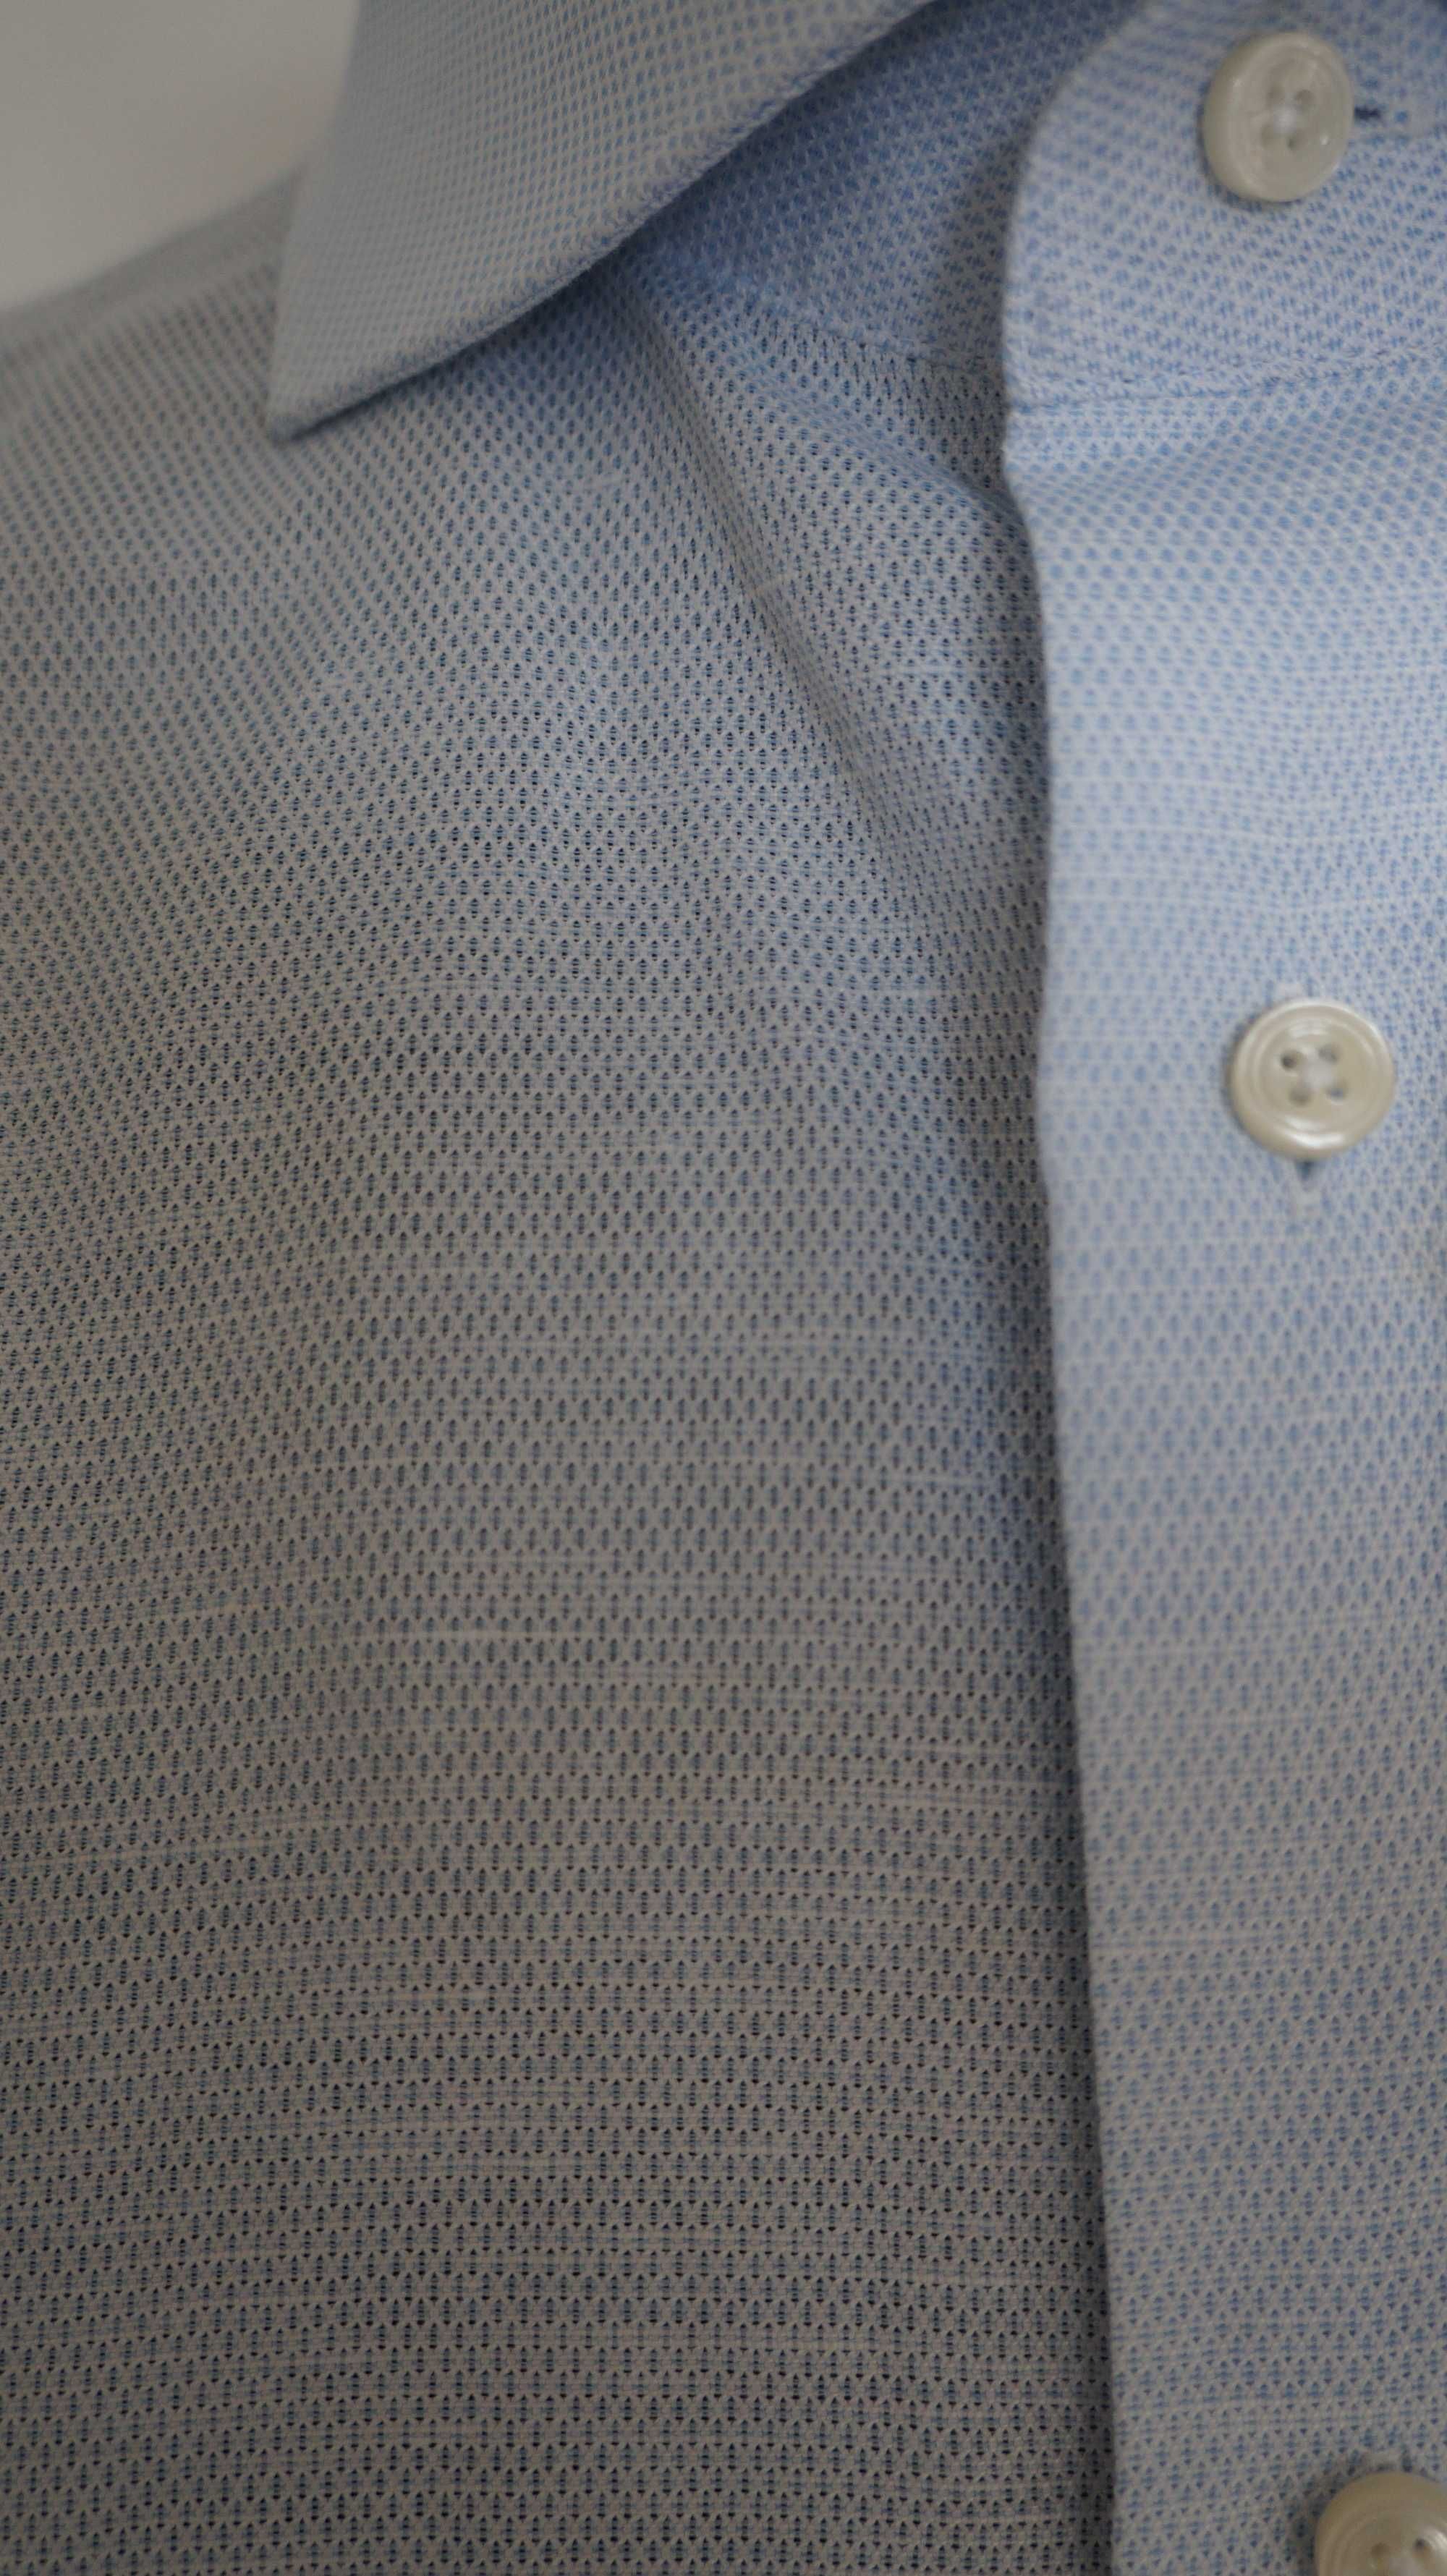 Koszula Nowa Suitsupply Roz. 42/16,5 Kol. Błękitny Extra Slim Fit